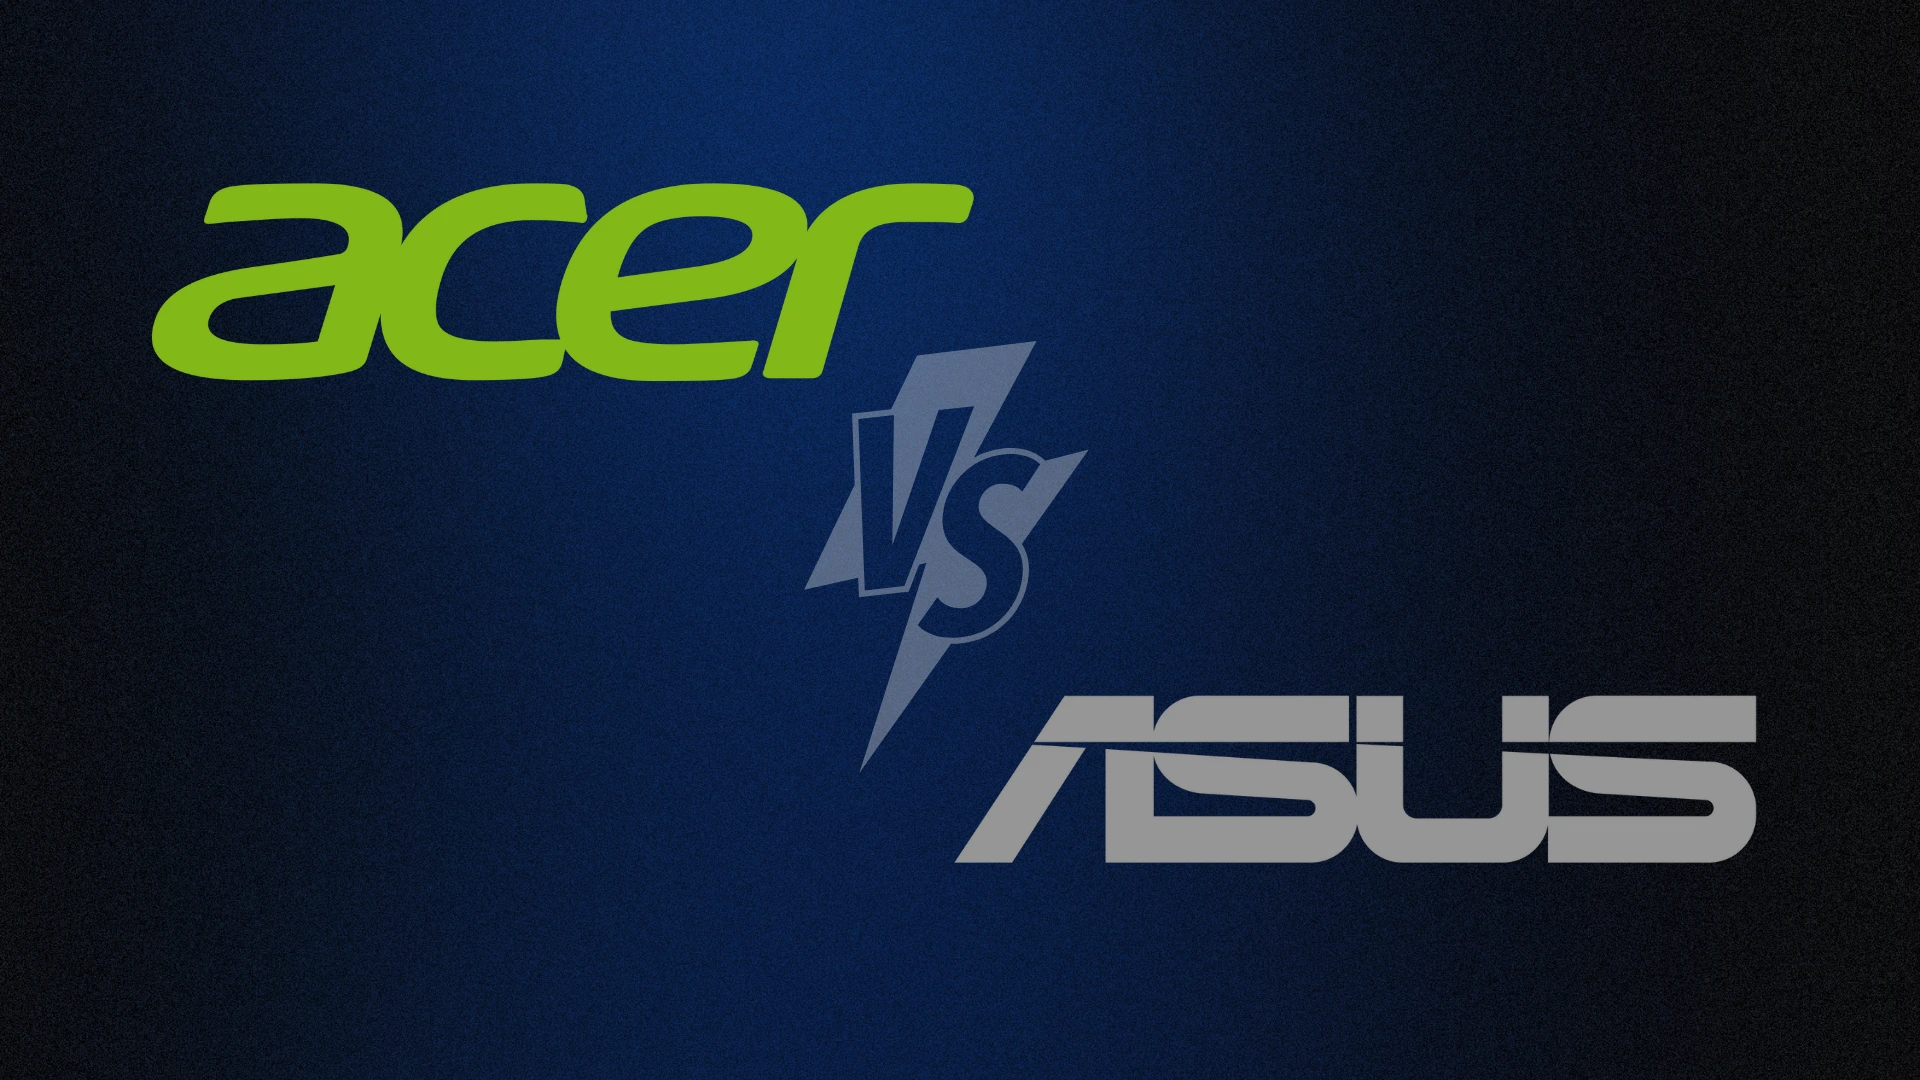 Acer vs Asus